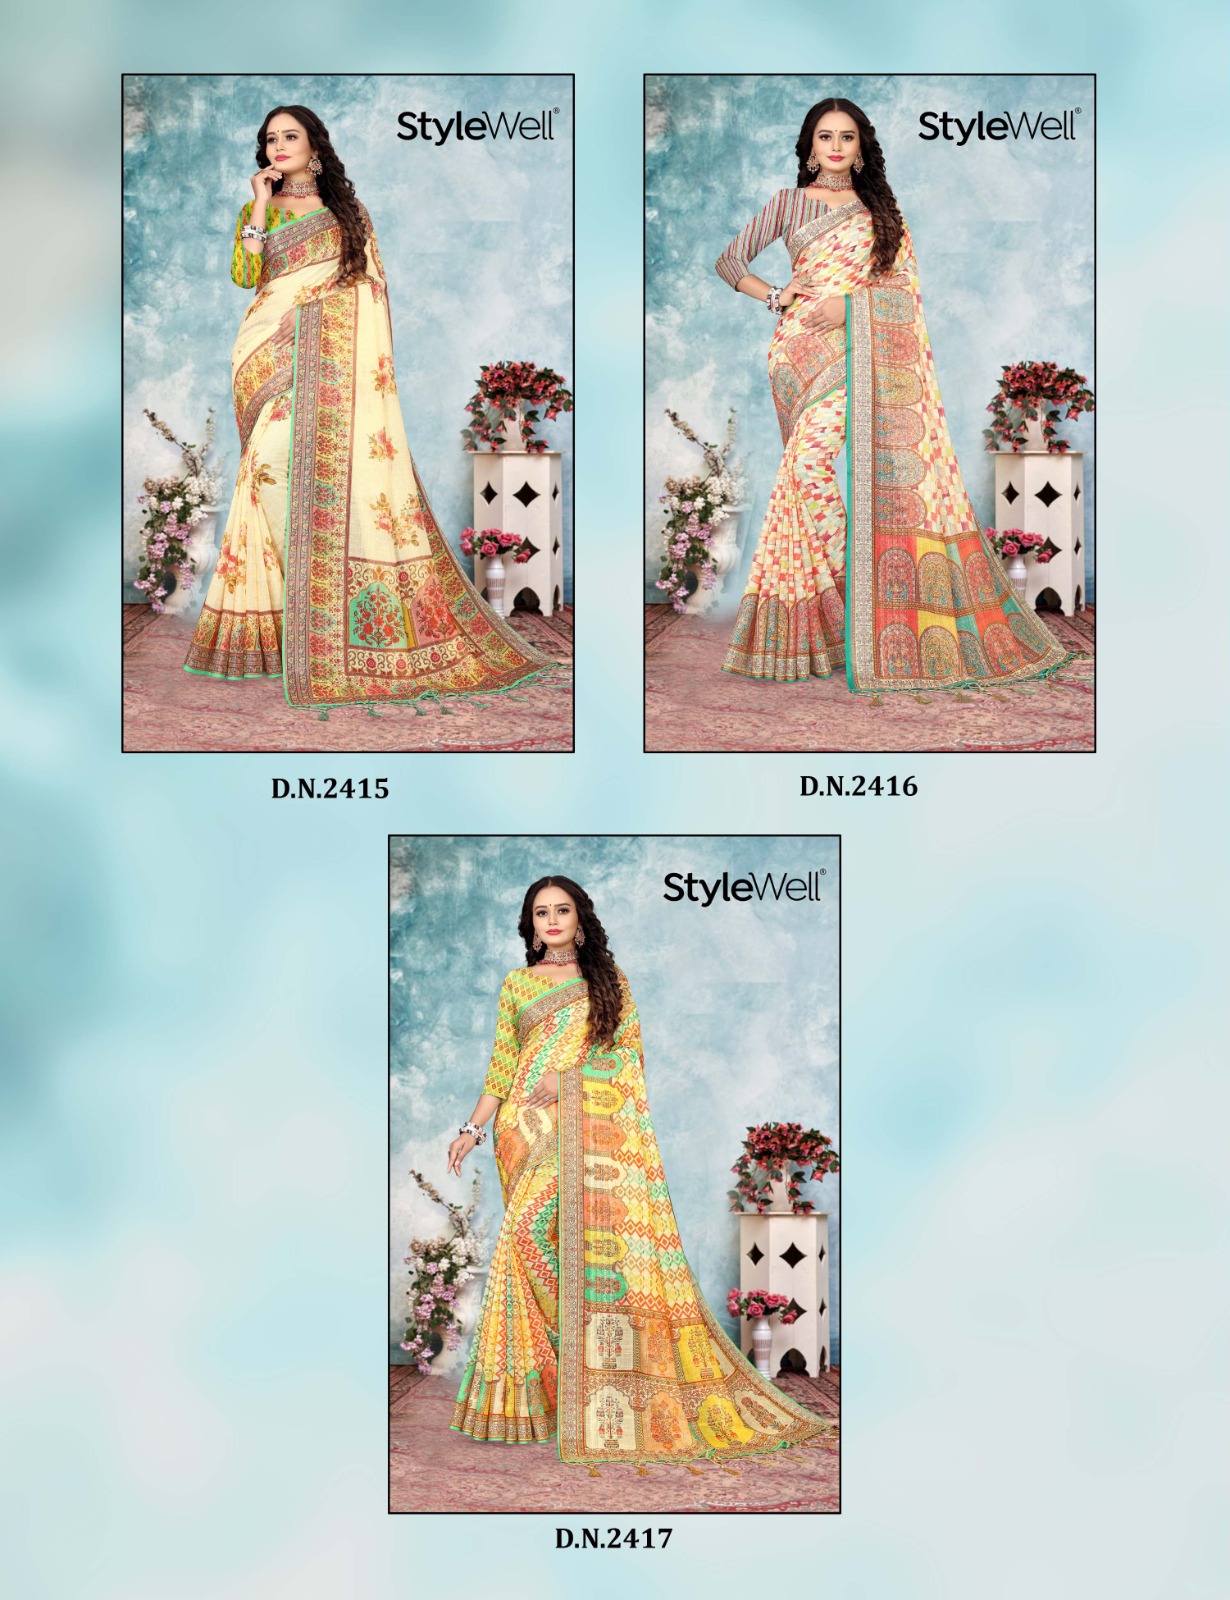 stylewell tamanna vol 3 linen exclusive print saree catalog